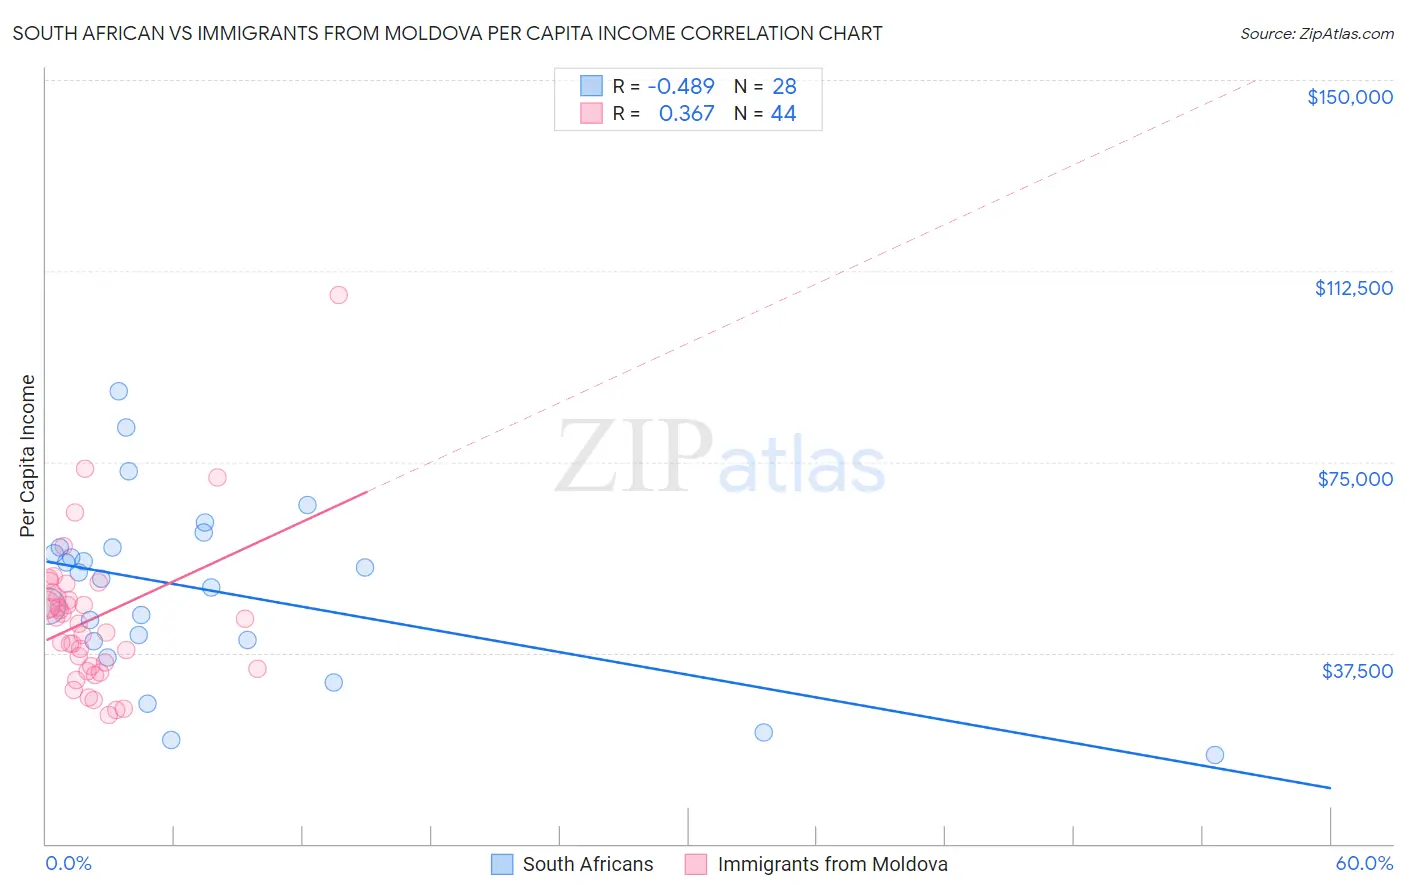 South African vs Immigrants from Moldova Per Capita Income